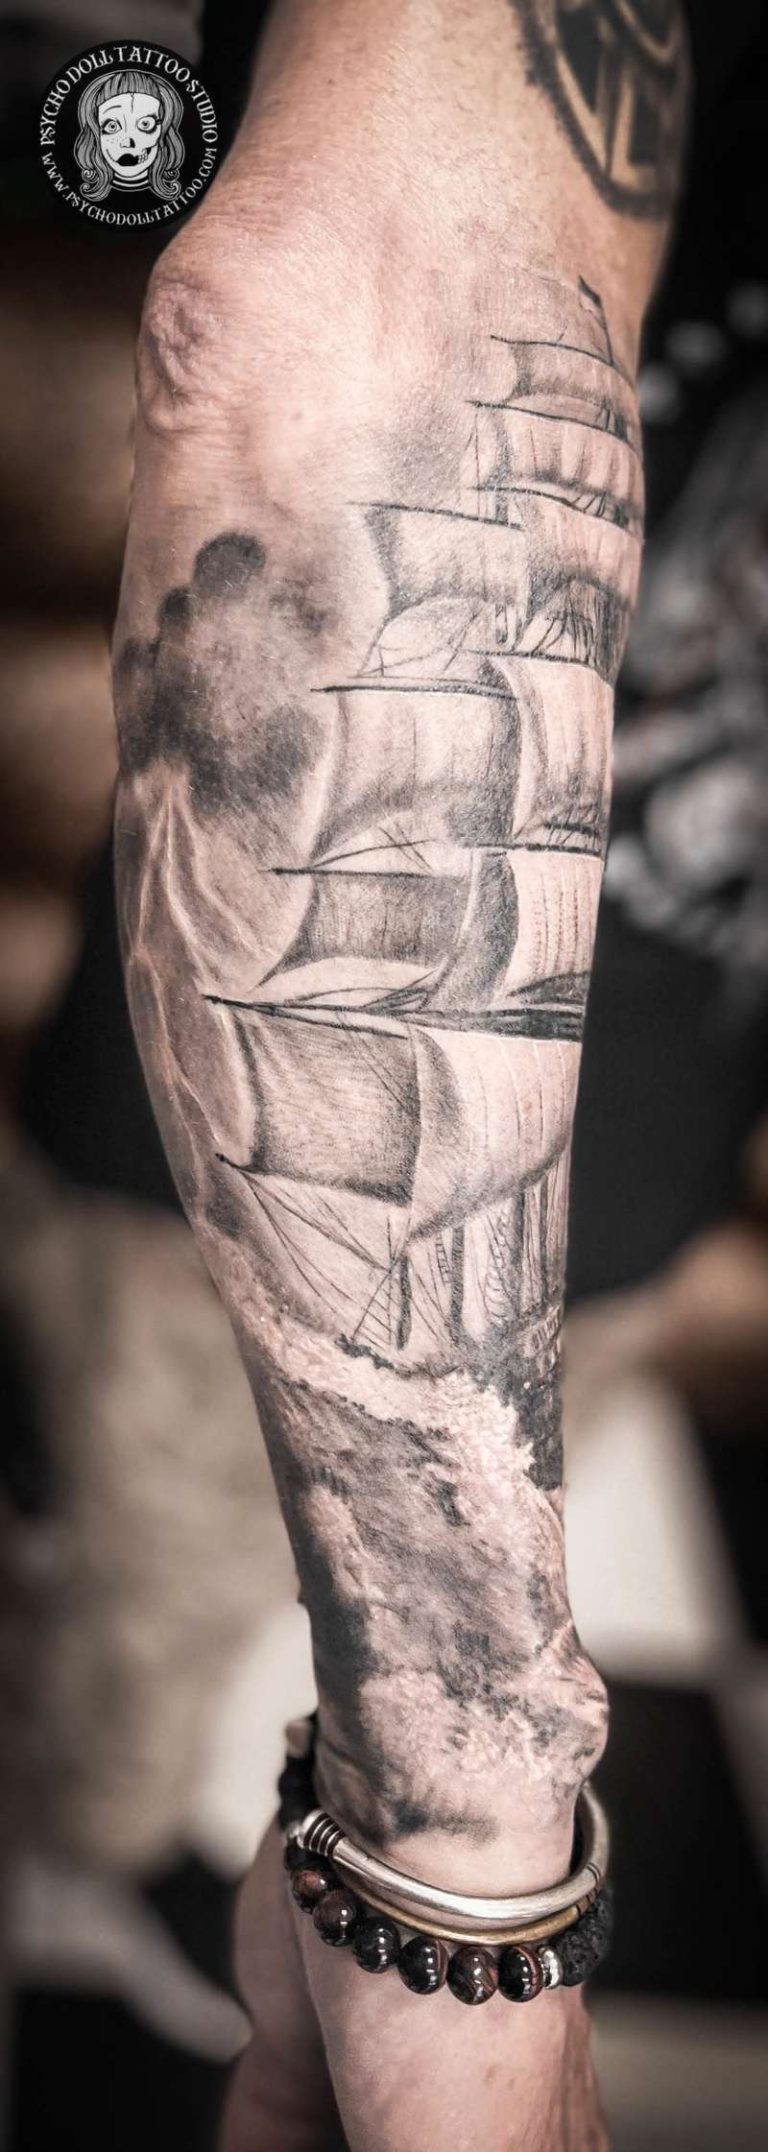 tatuaje realista barco brazo